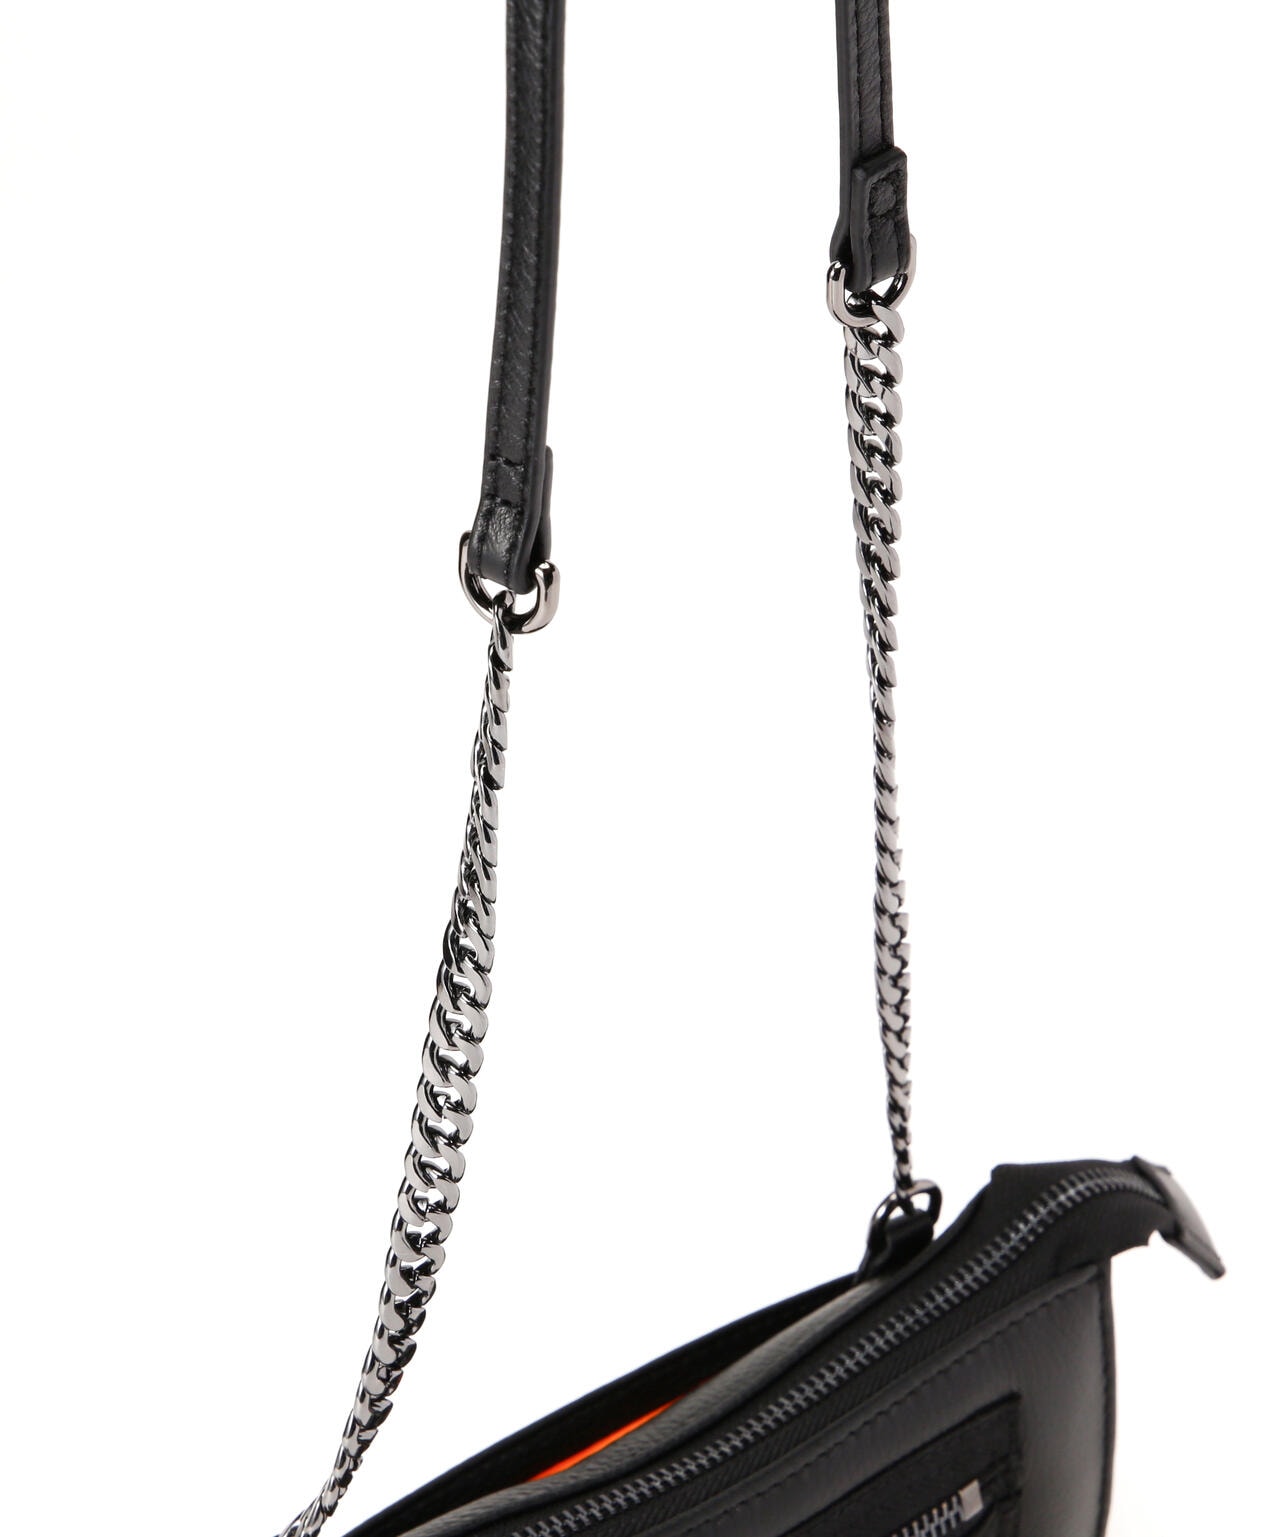 Leather Chain Sholder Bag/レザー チェーン ショルダーバッグ 